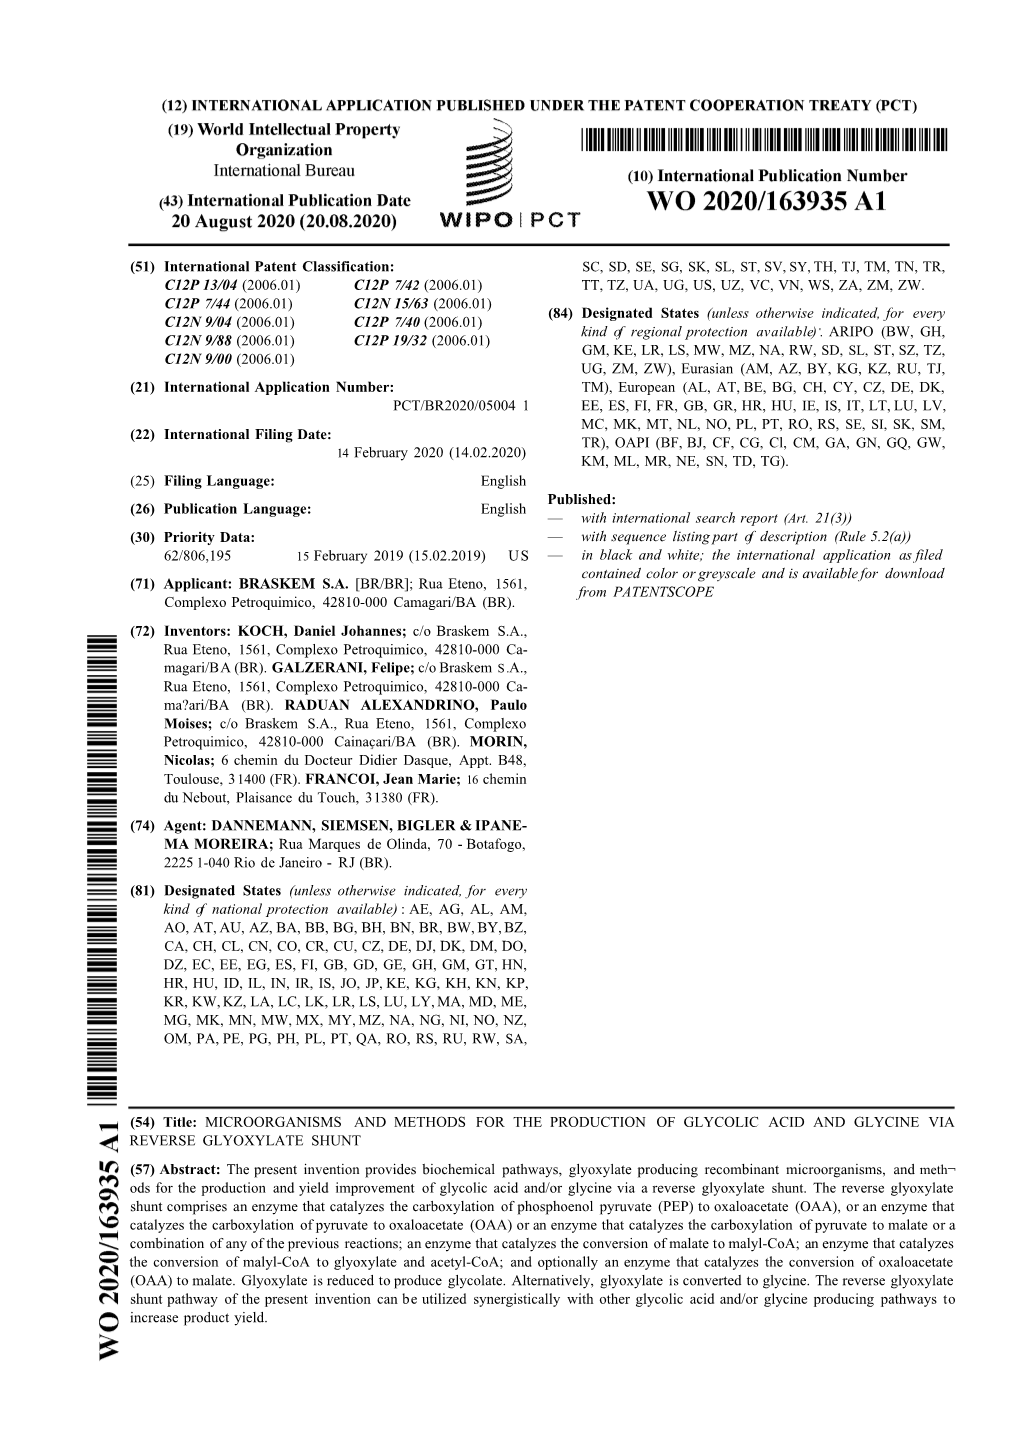 ) (51) International Patent Classification: C12P 13/04